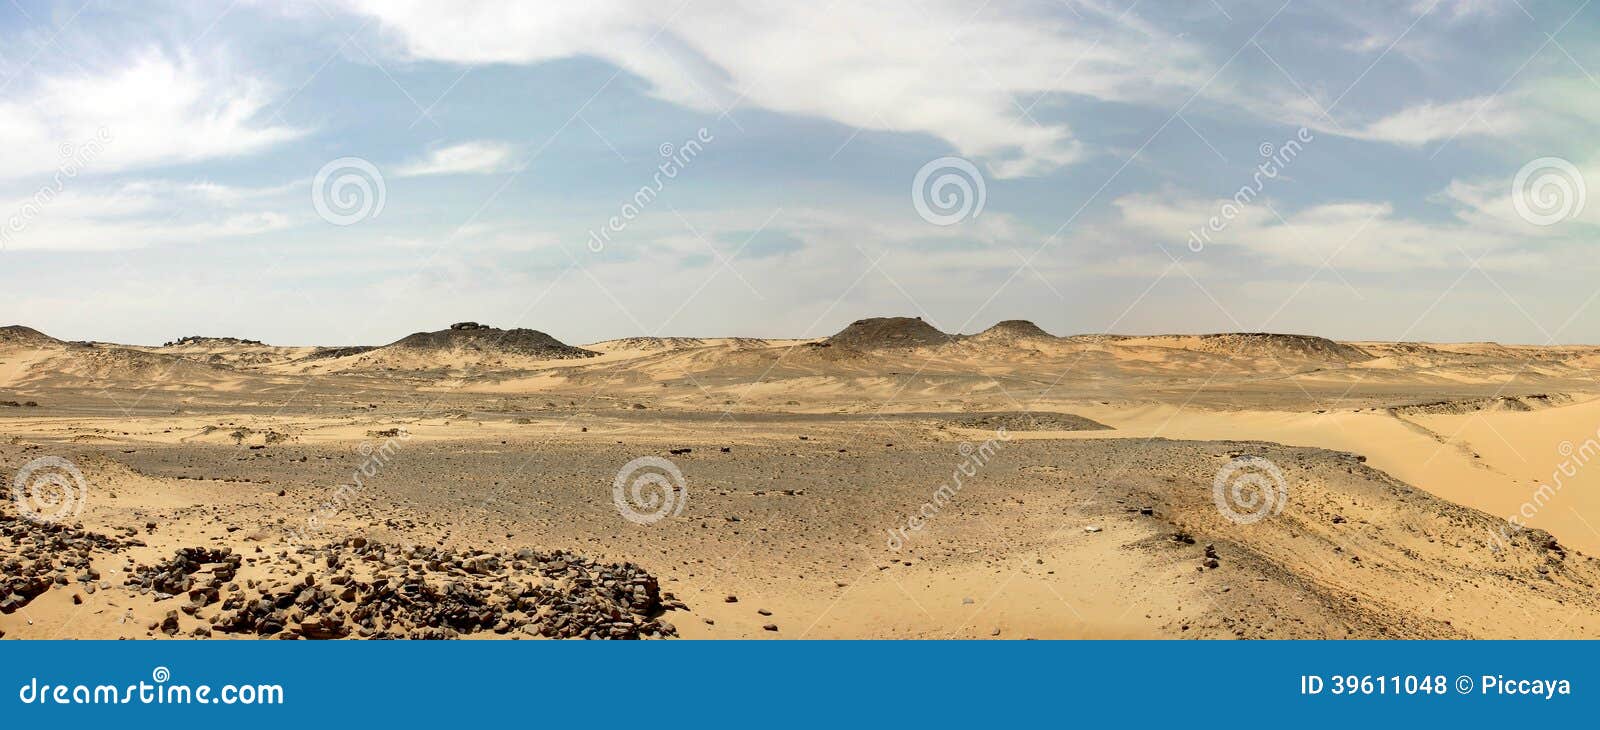 libyan desert.